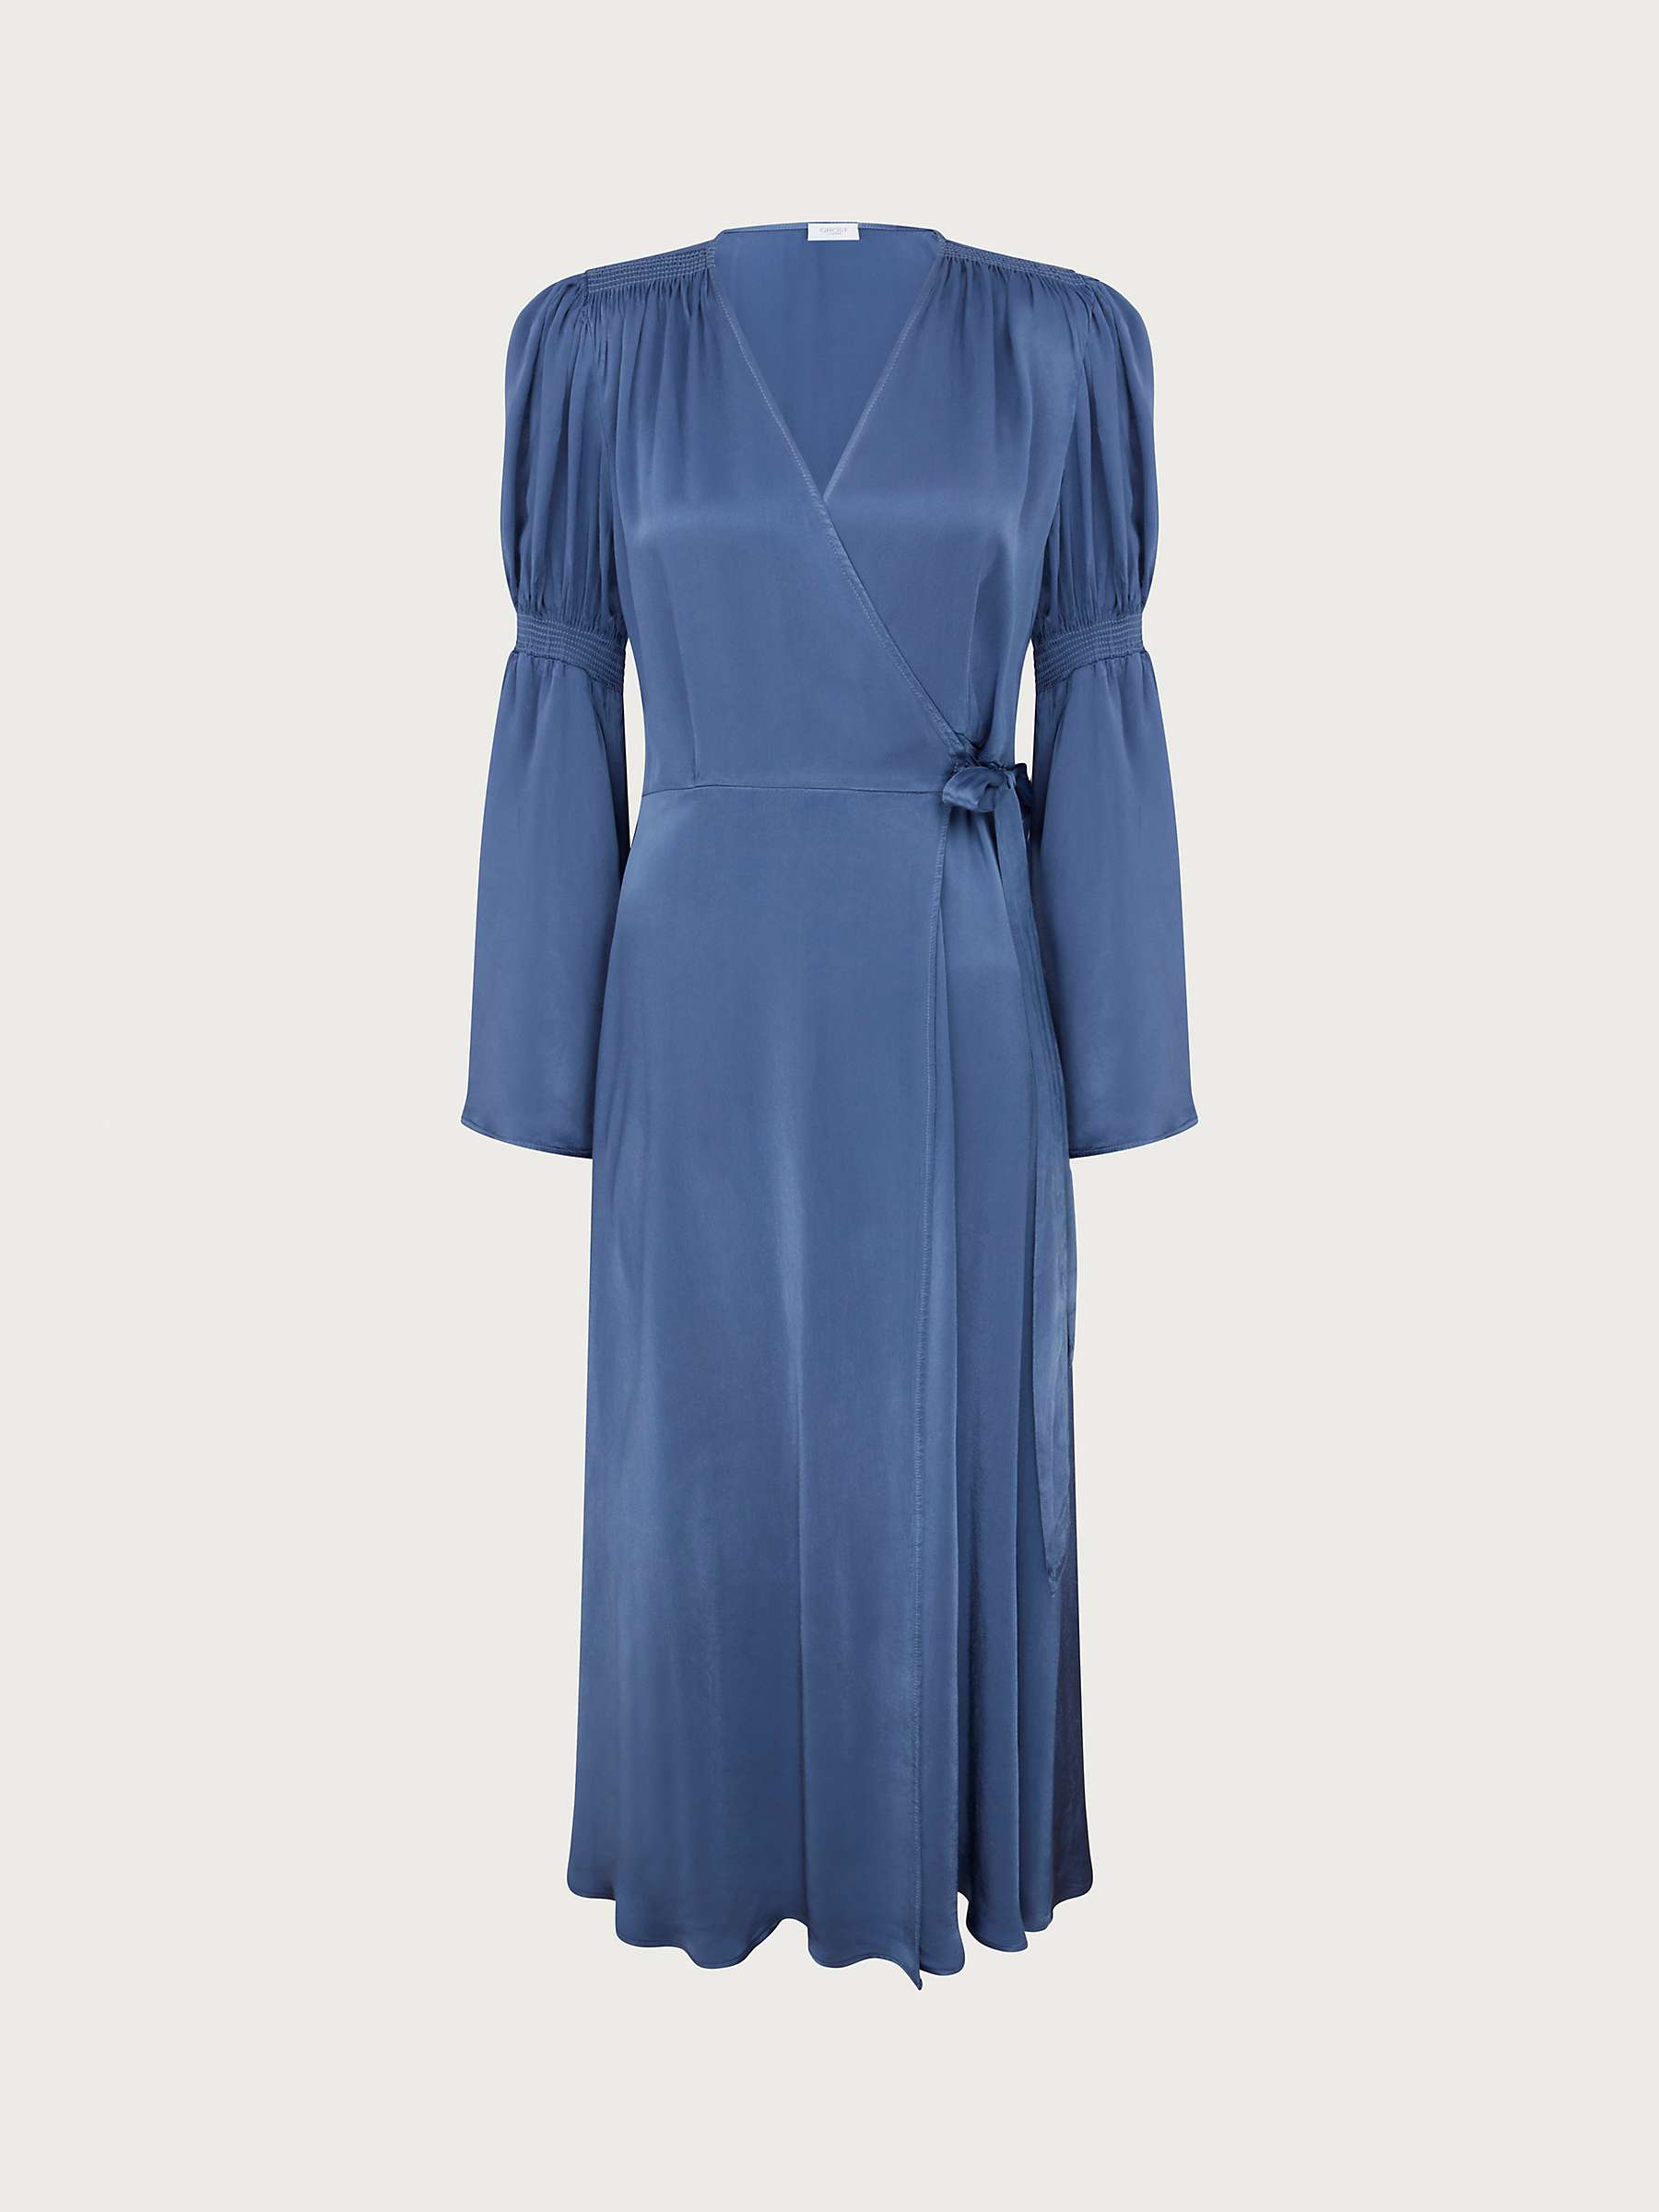 Ghost Maeve Satin Wrap Dress, Slate Blue at John Lewis & Partners